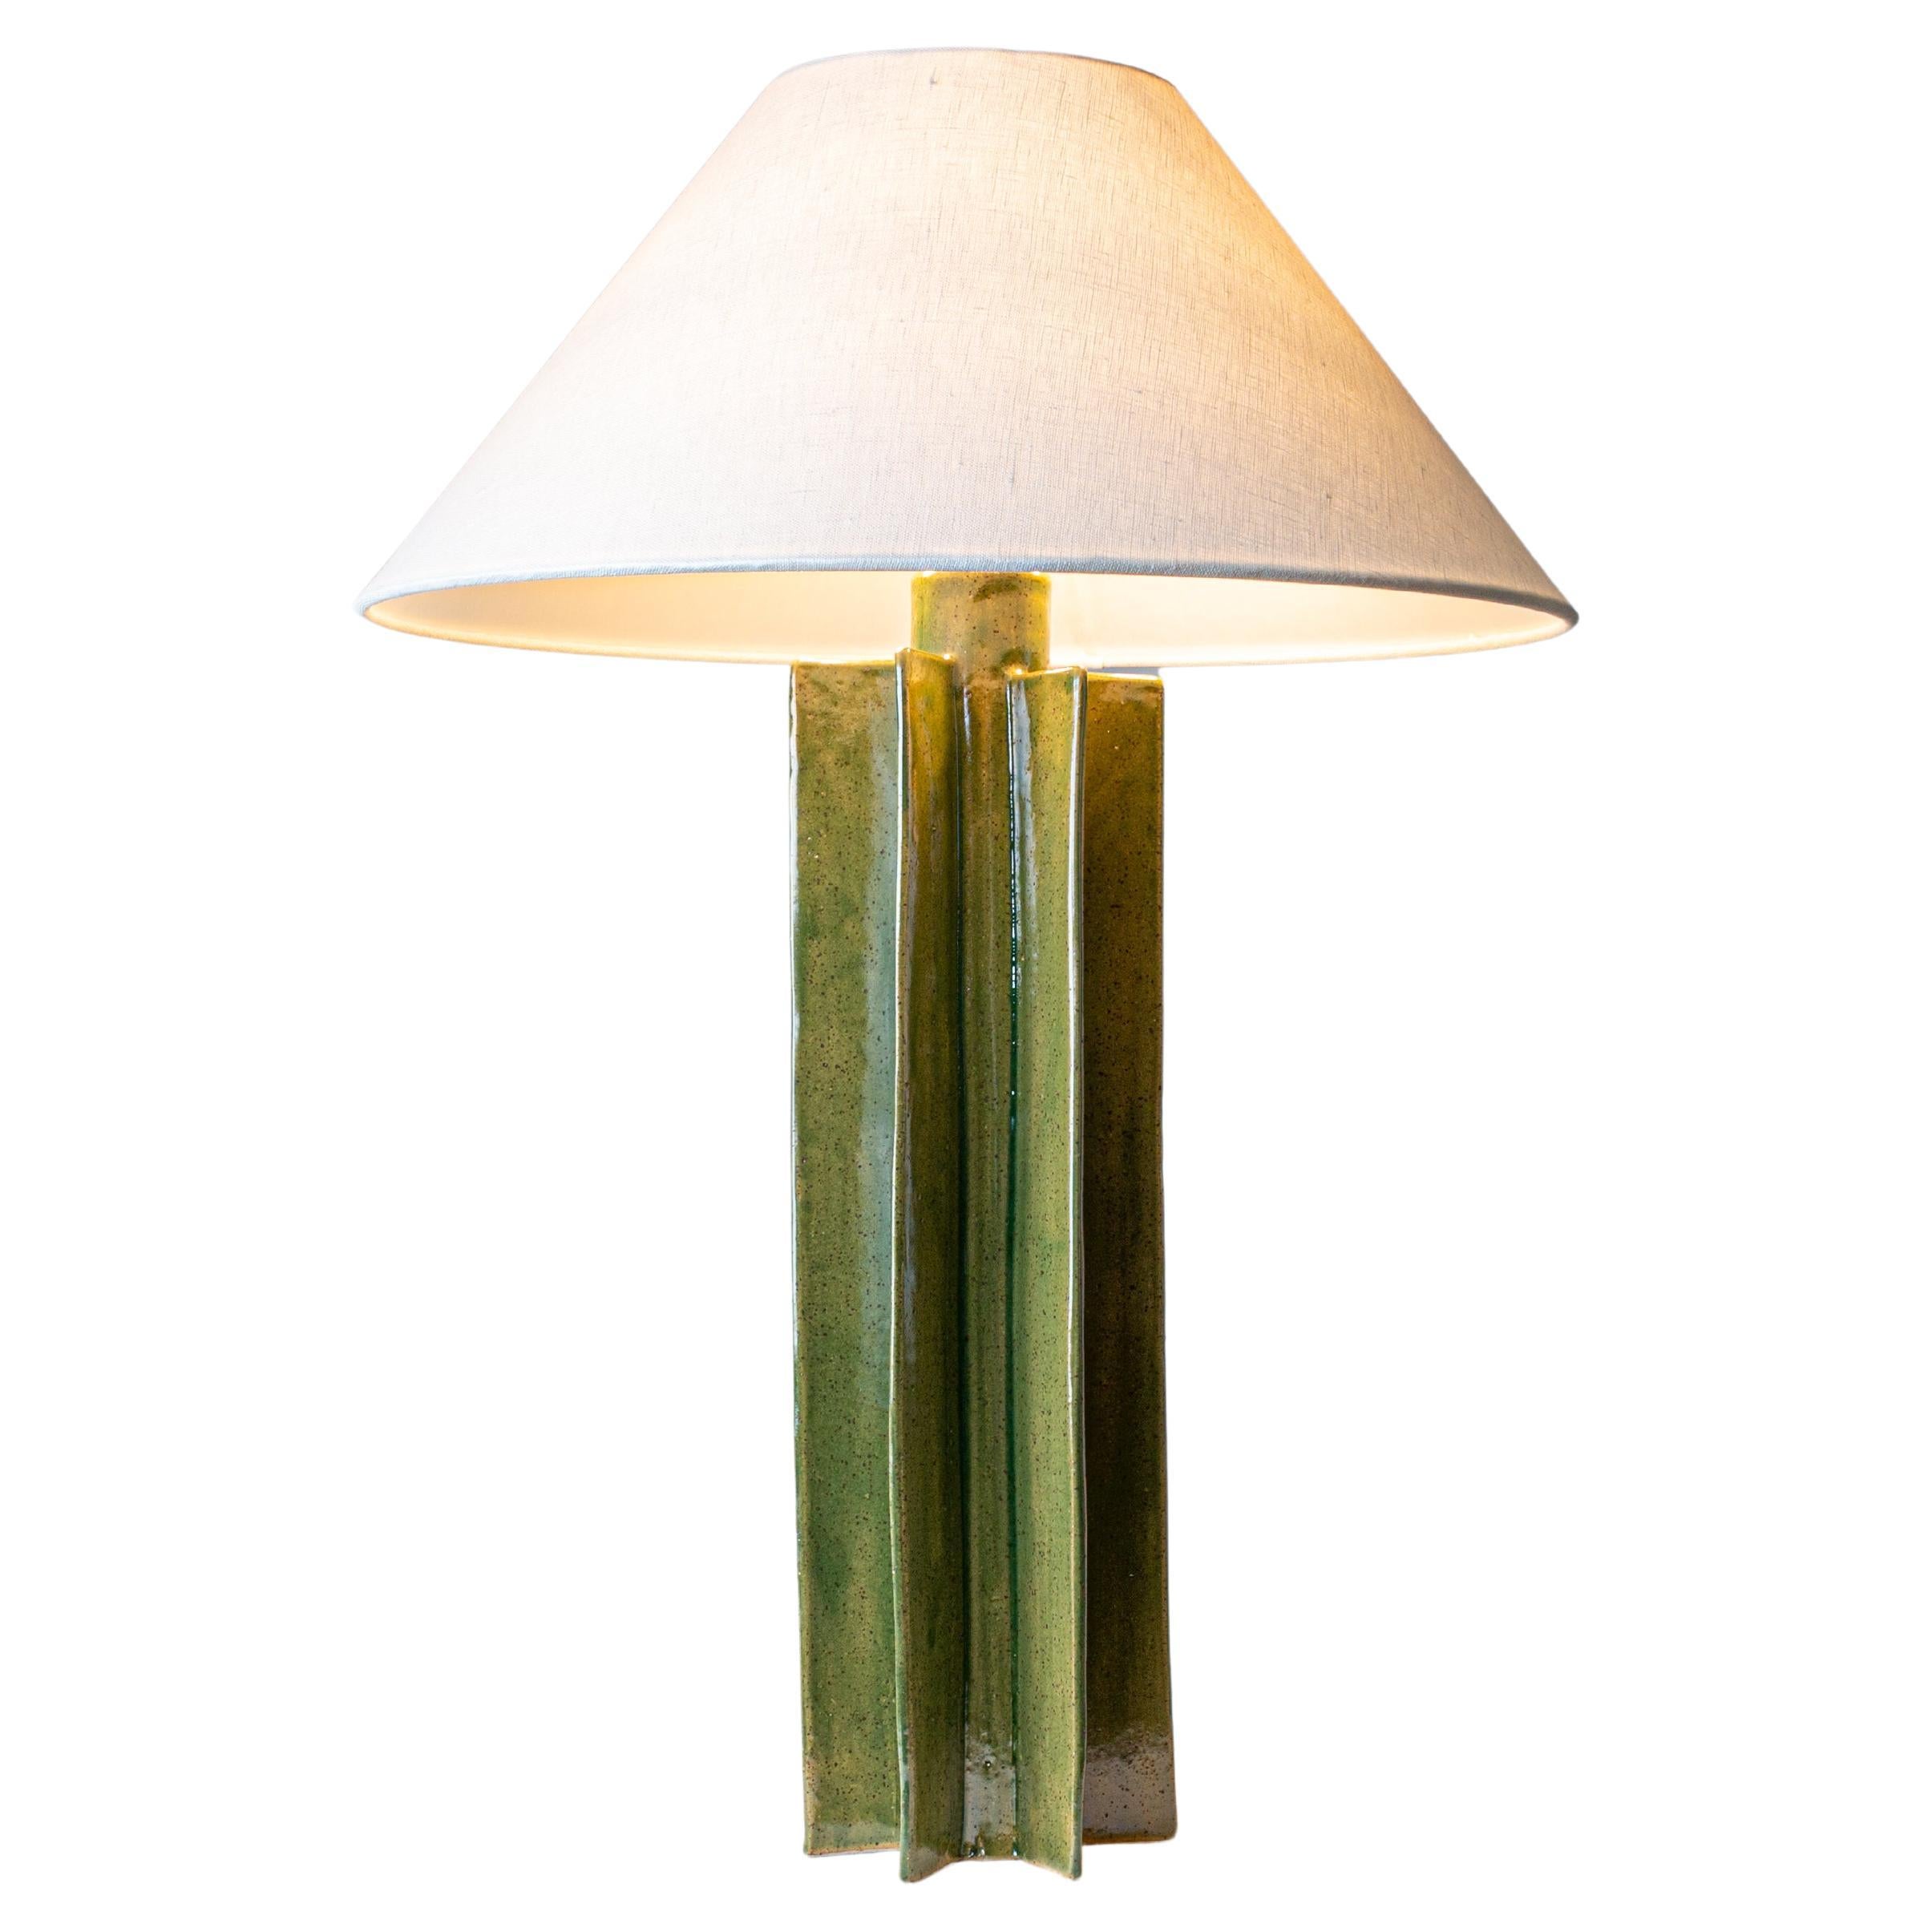 FIN Shade Table Lamp, Green Glaze Finish, hanbuilt ceramic lamp by Kalin Asenov For Sale